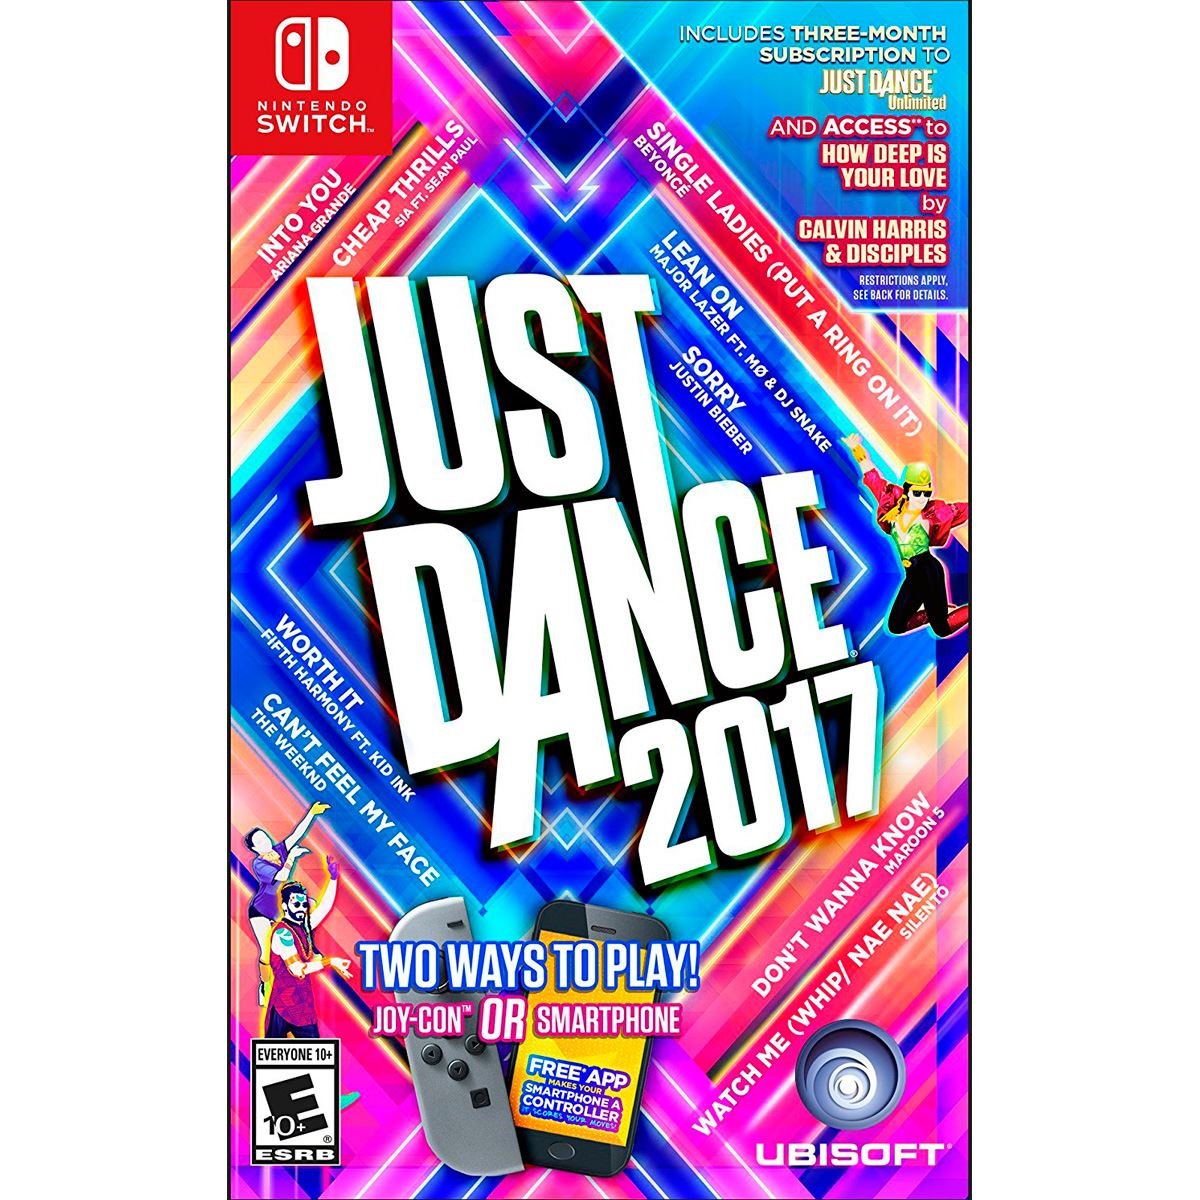 Nintendo Switch Just Dance 2017